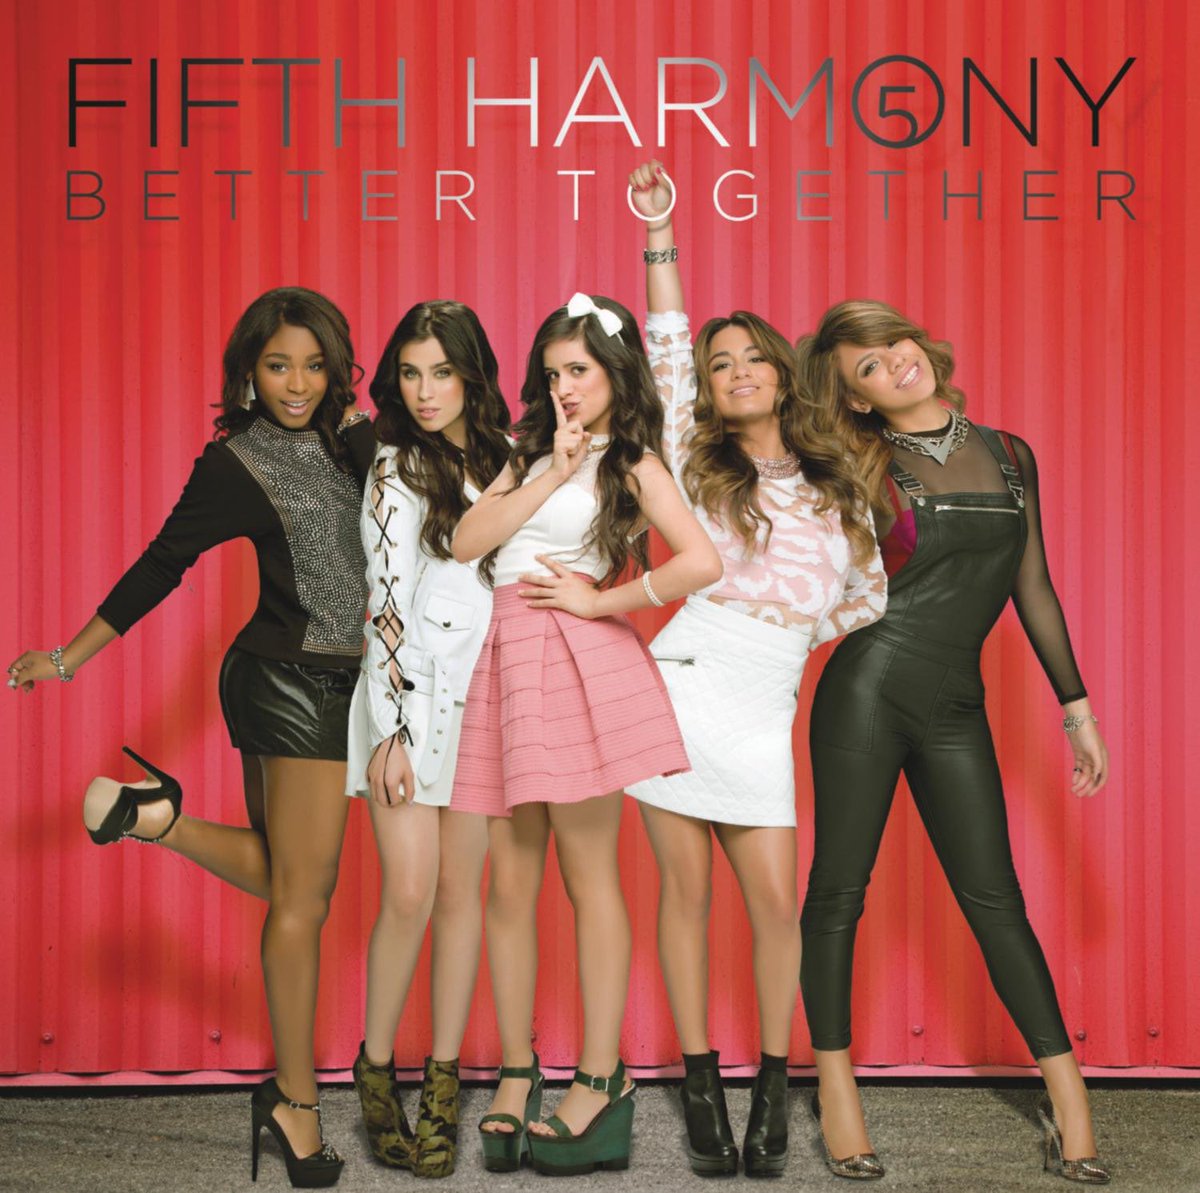 rank Fifth Harmony’s discography